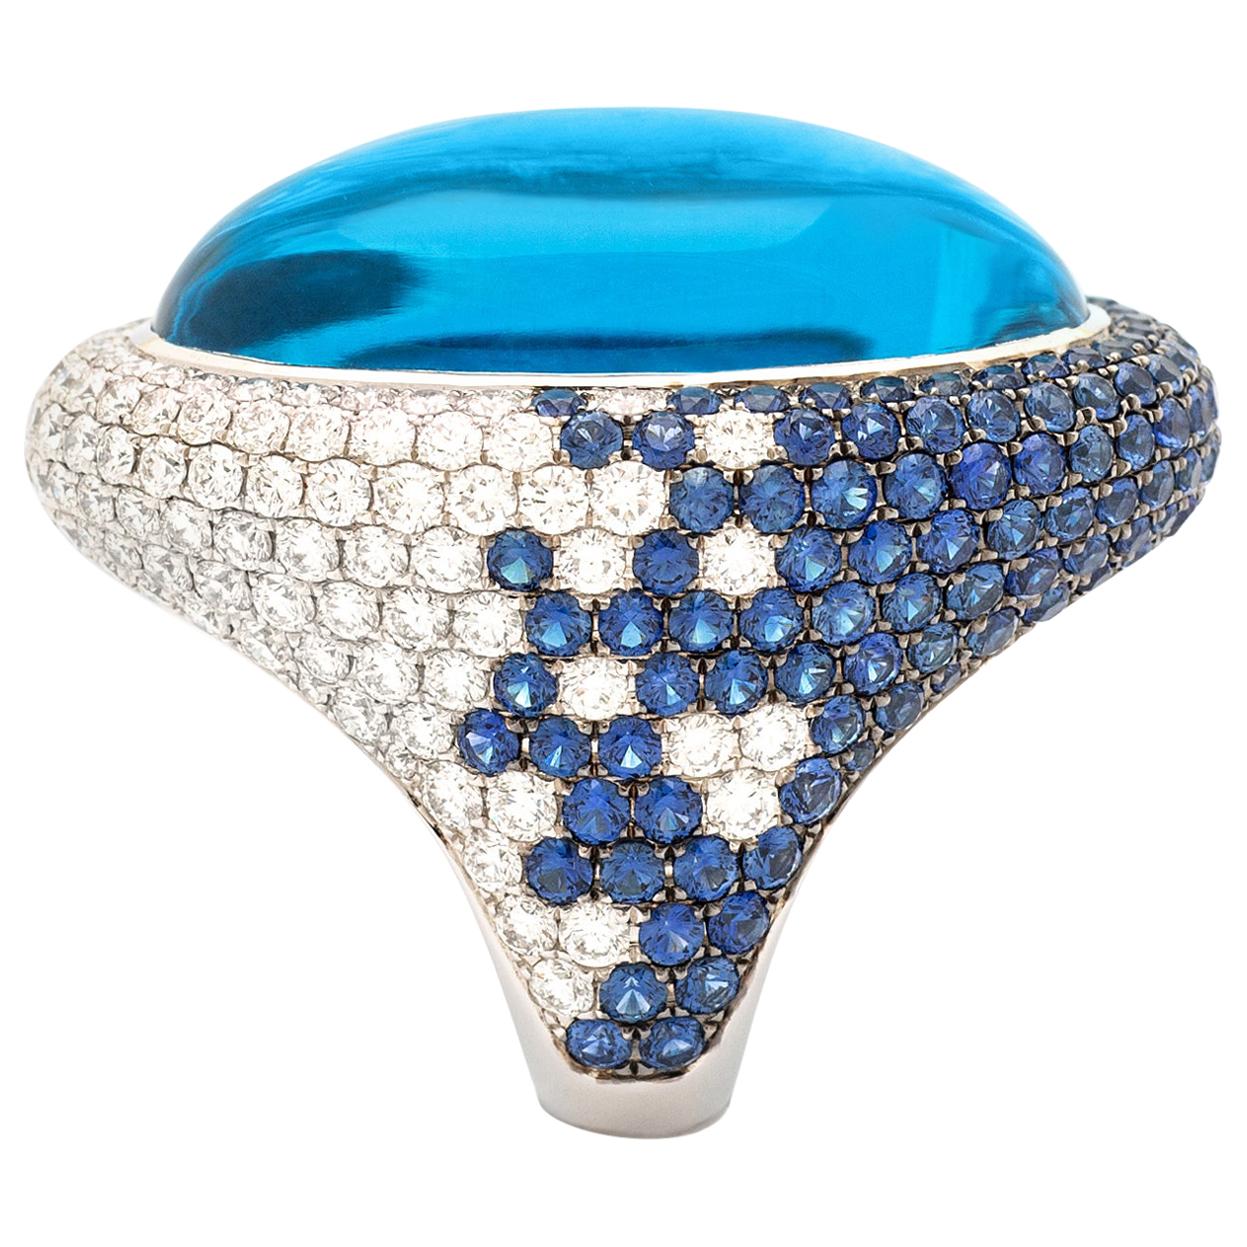 51.60 Carat Blue Topaze on Diamond and Sapphire Gold Ring